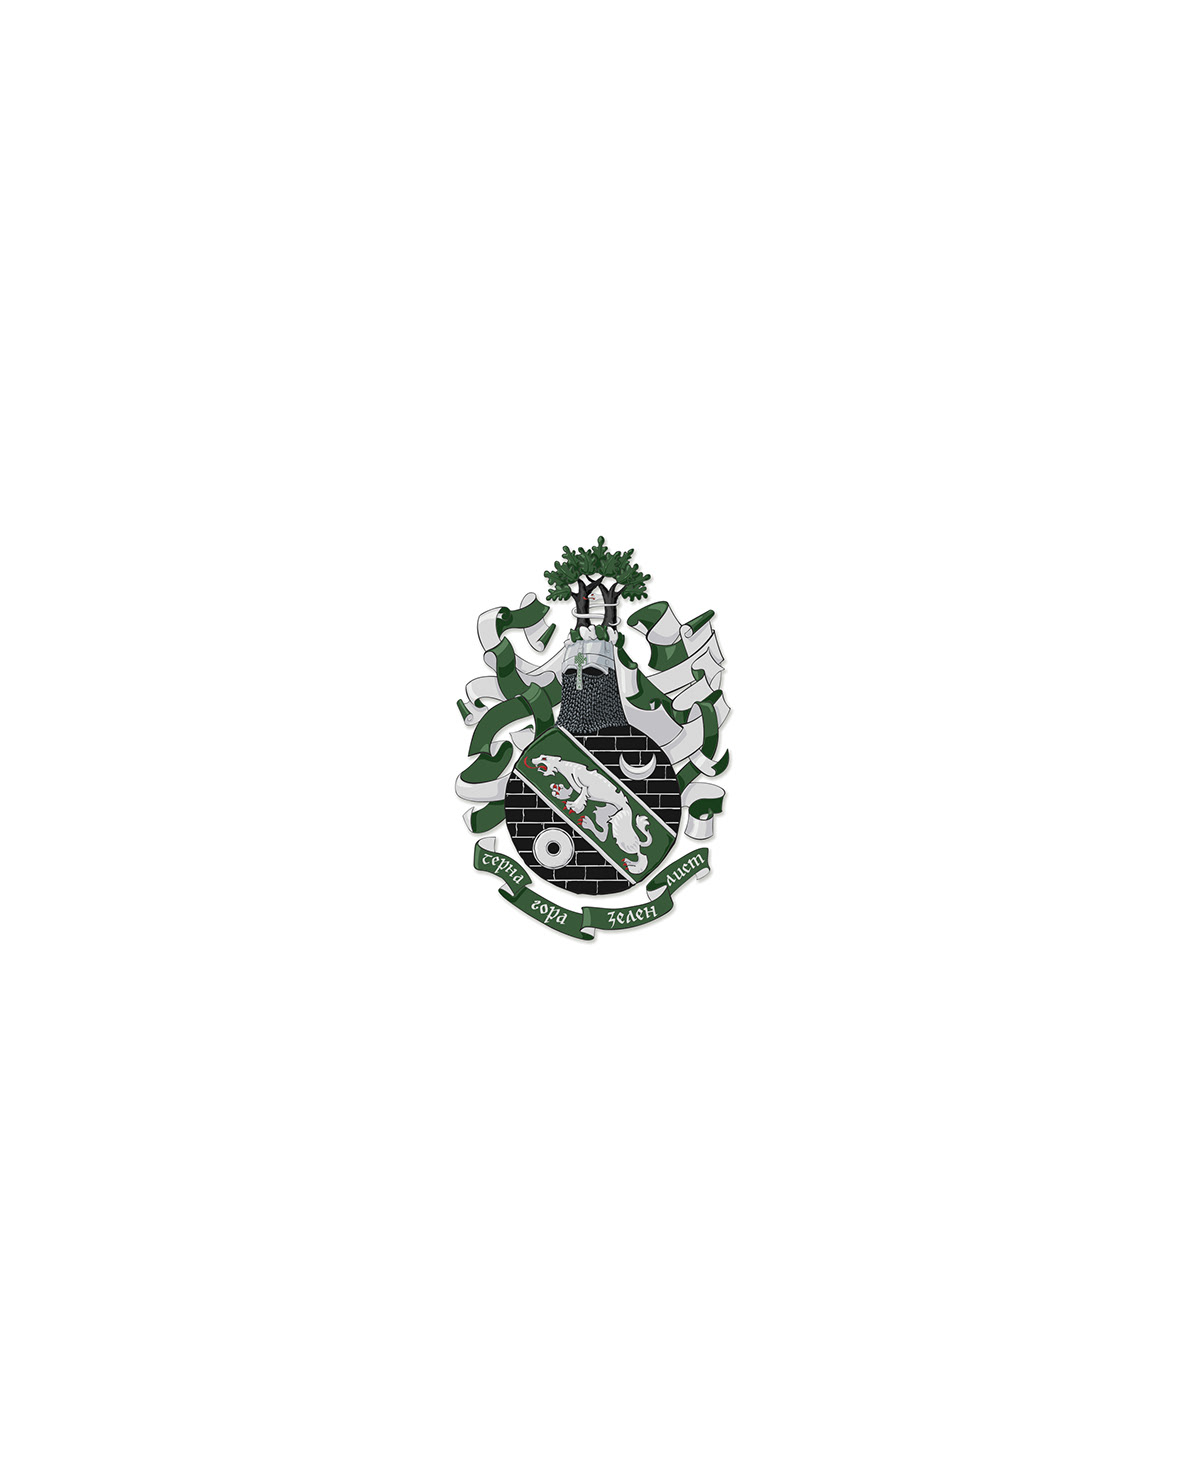 coat of arms heraldry armorial weasel хералдика герб невестулка